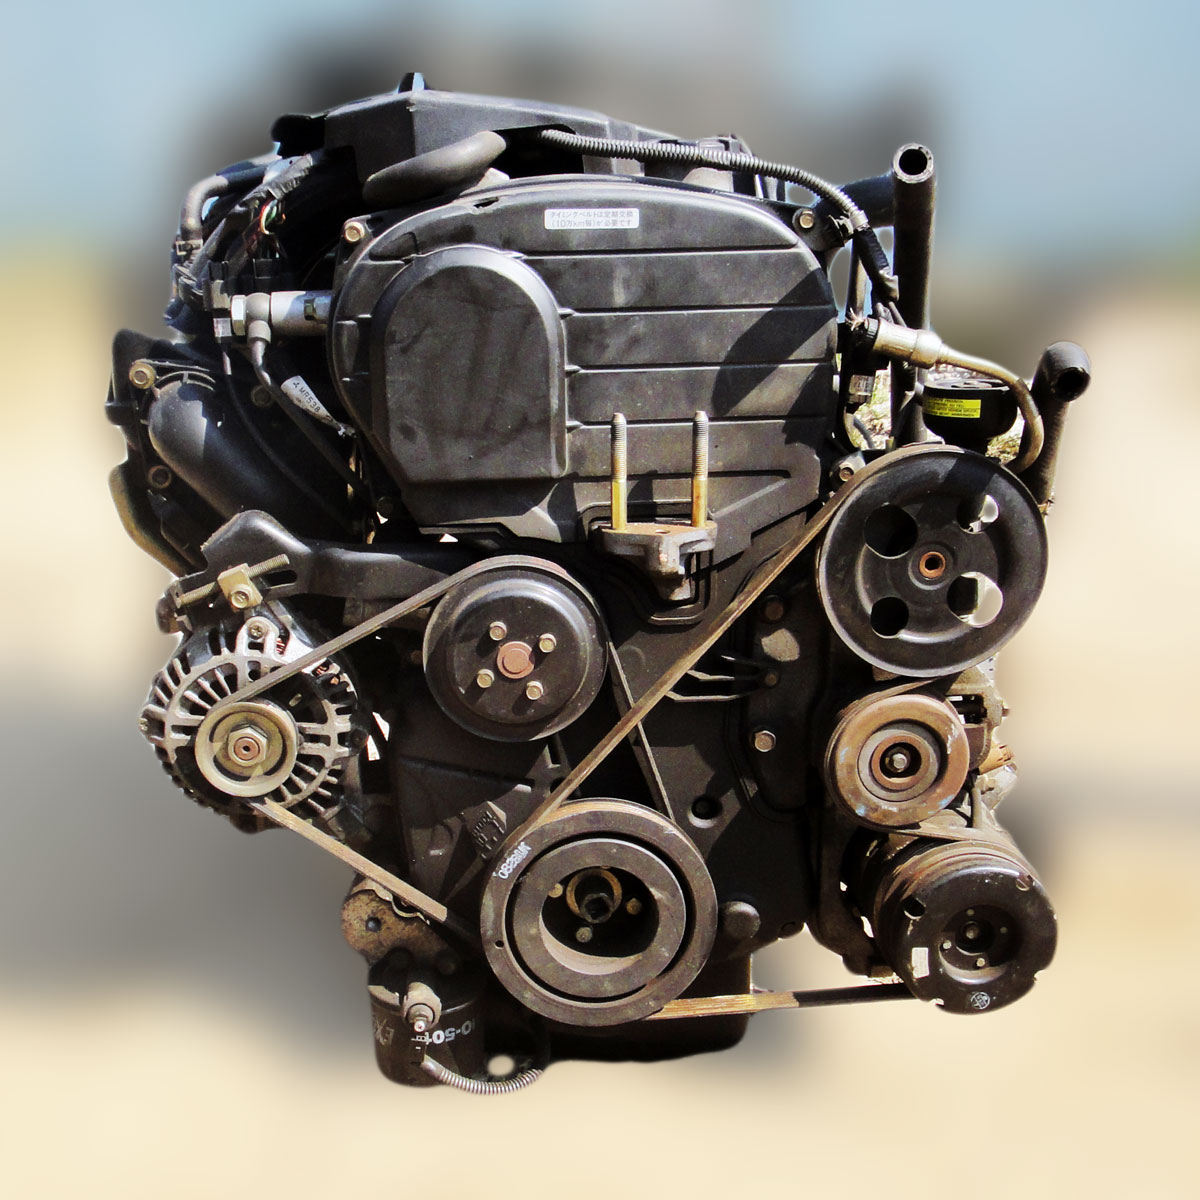 Двигатель mitsubishi 4g64 характеристики,проблемы,тюнинг